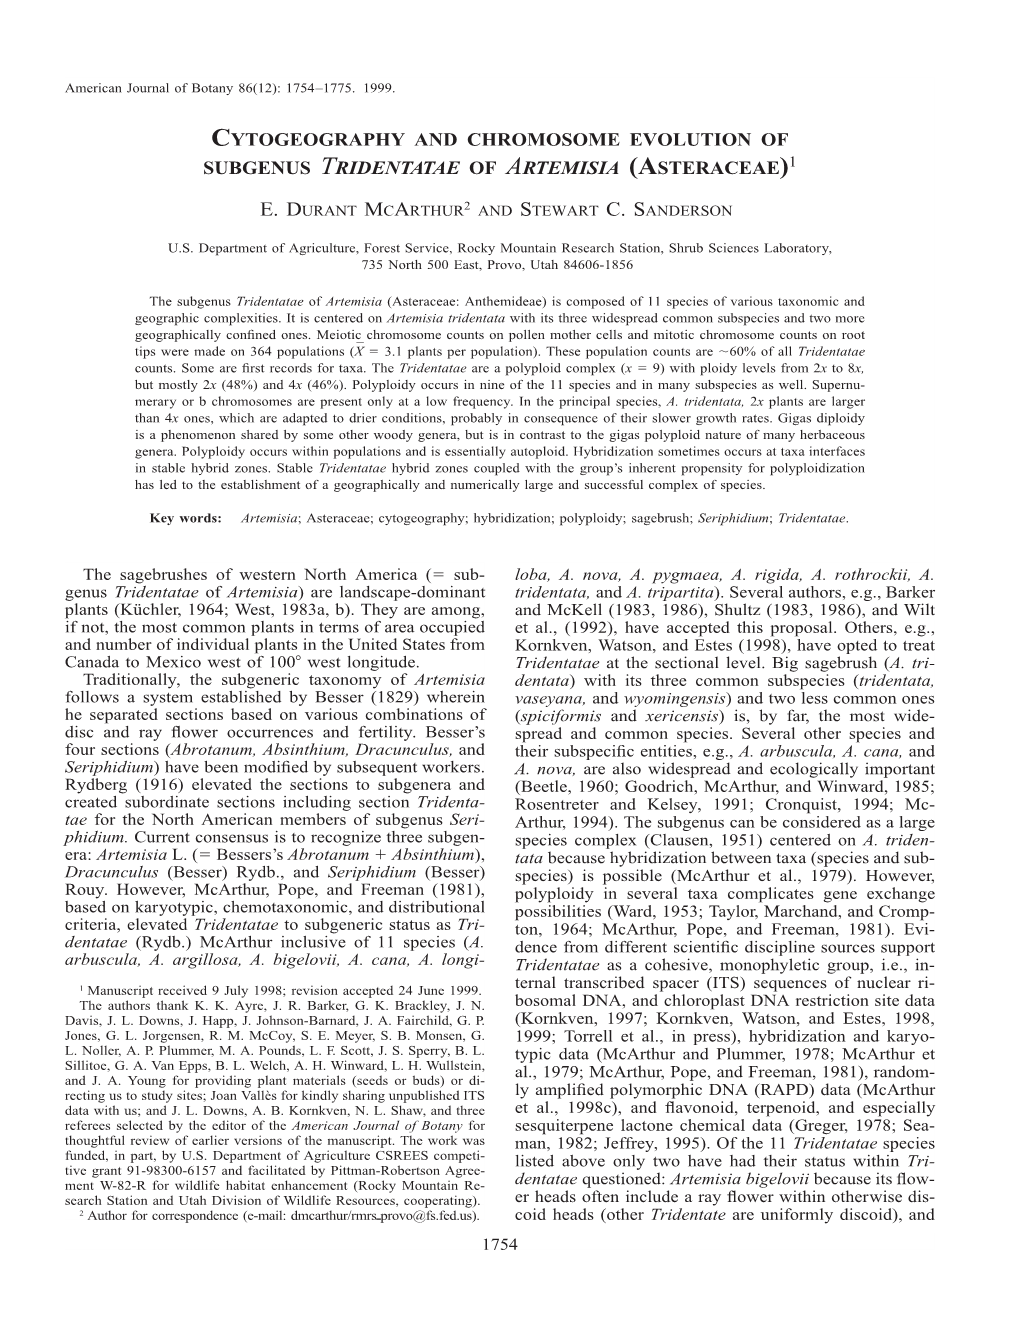 Cytogeography and Chromosome Evolution of Subgenus Tridentatae of Artemisia (Asteraceae)1